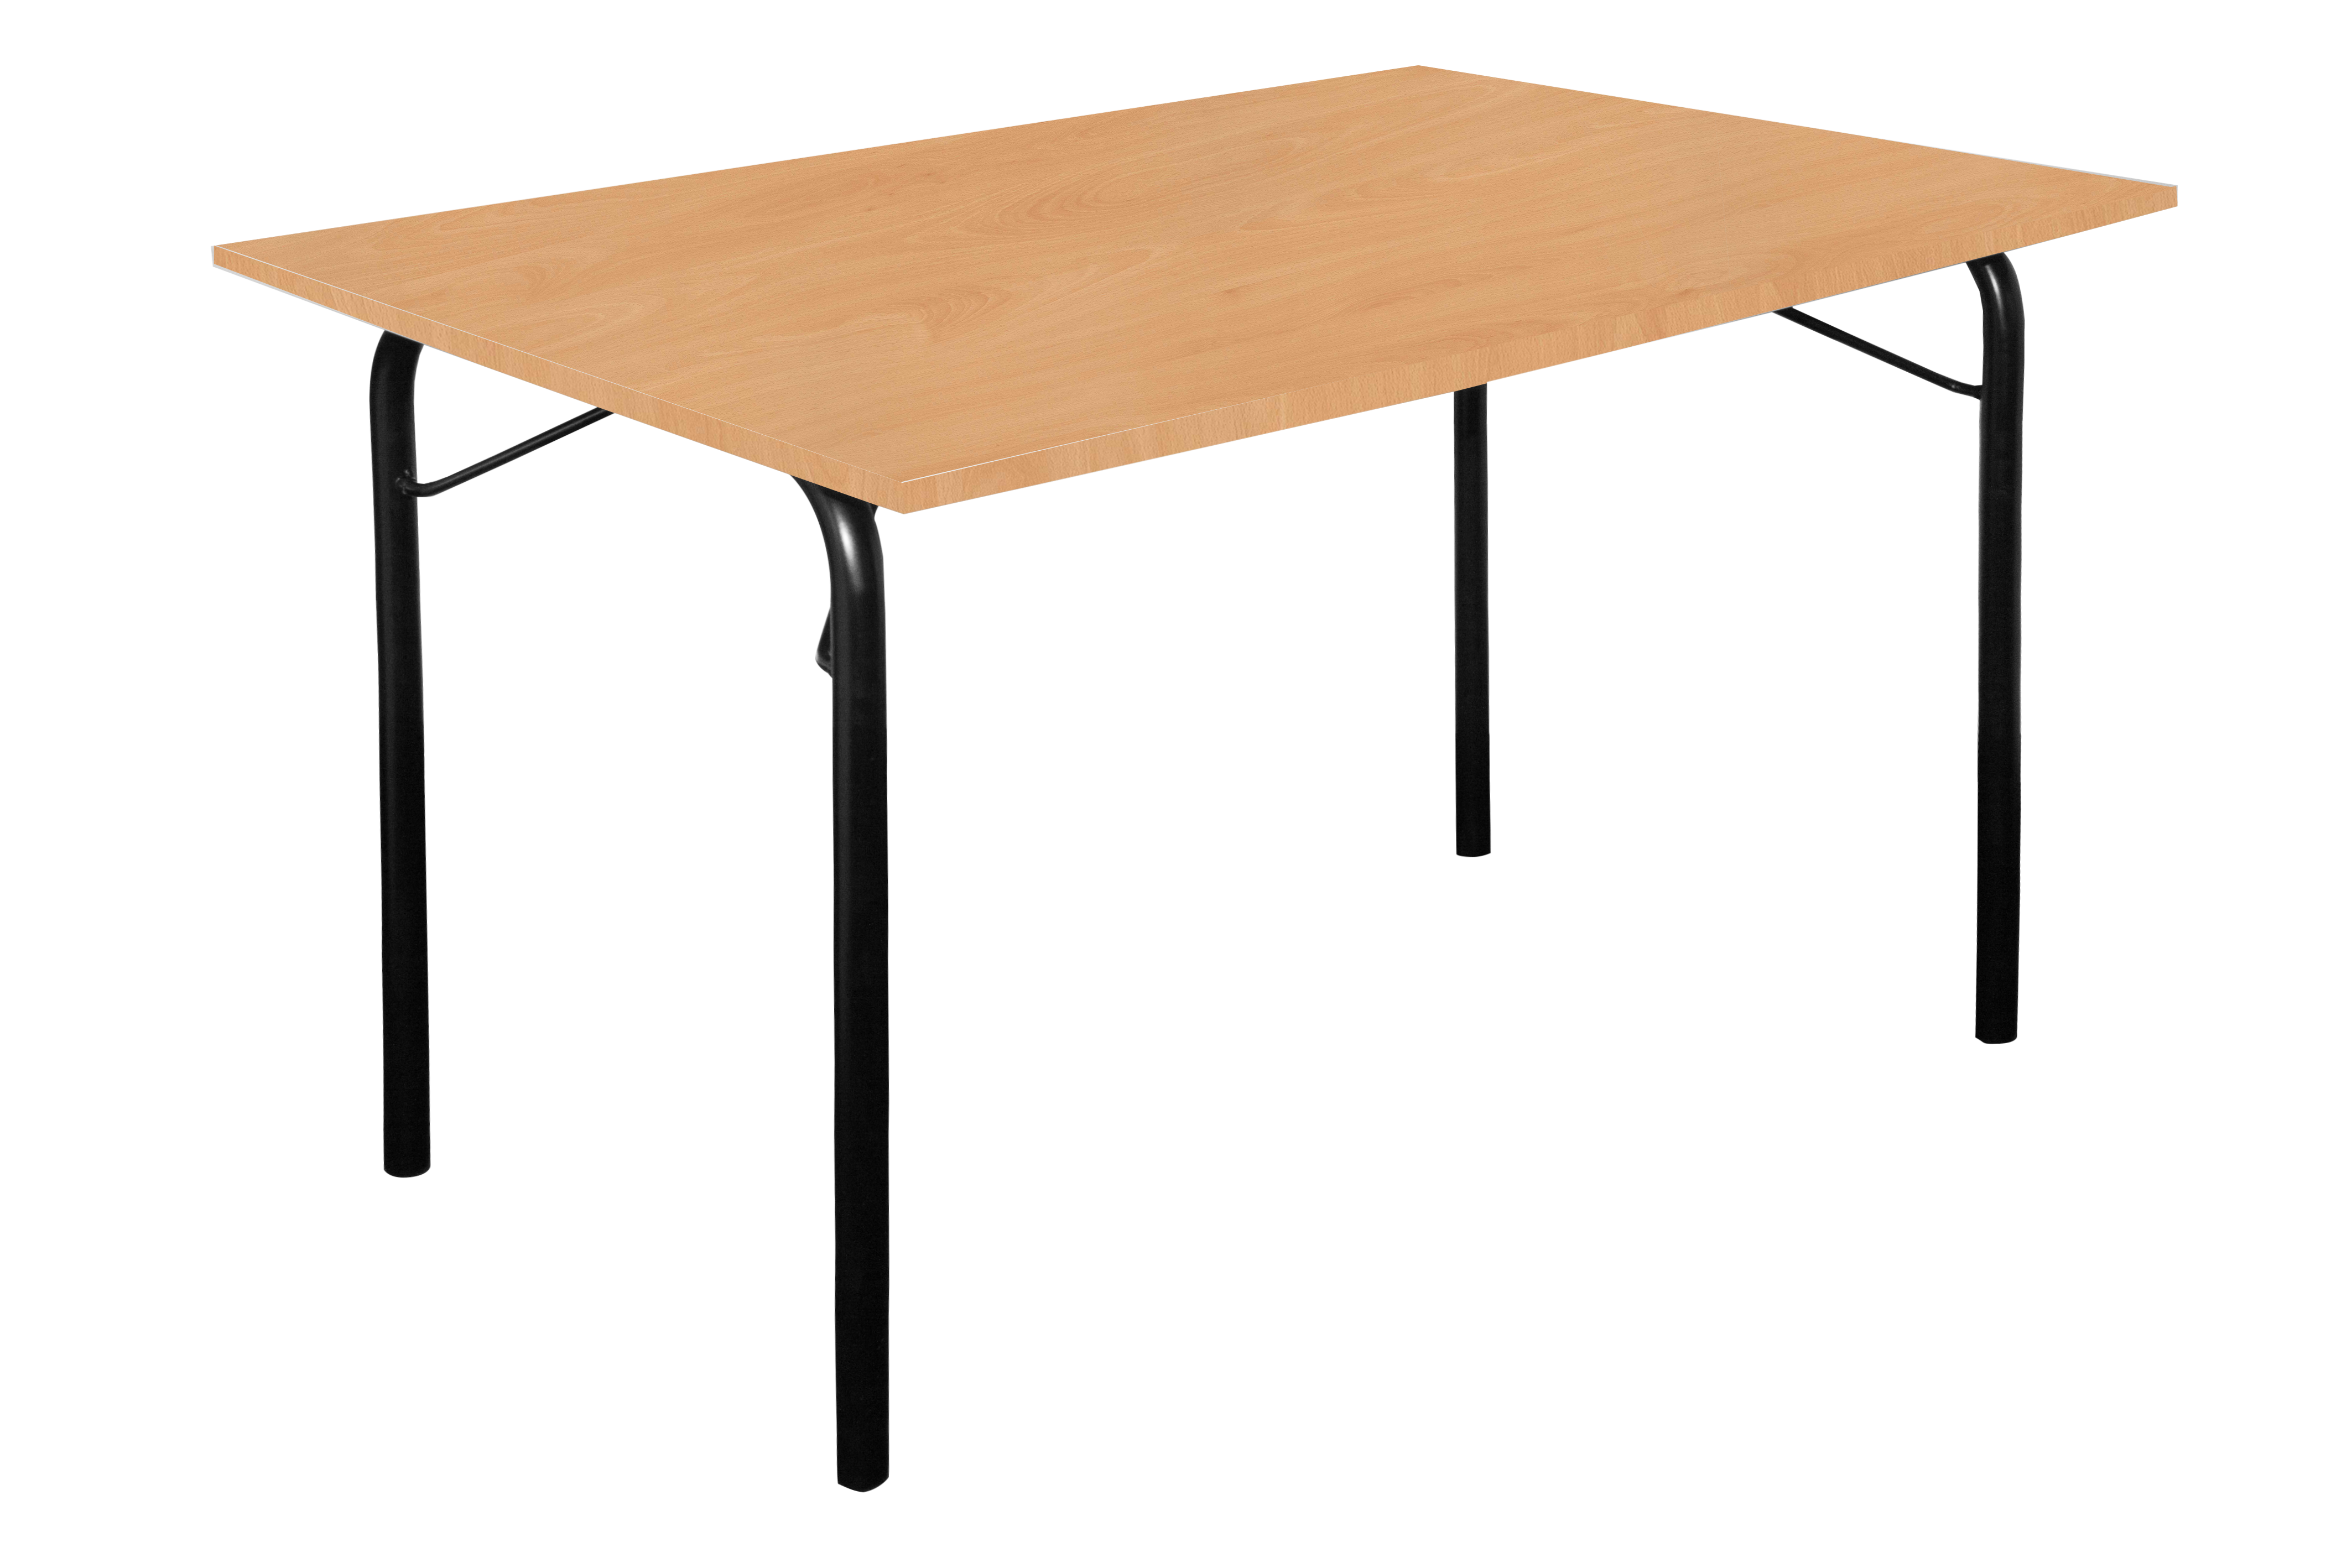 Table pliante 120 x 80 cm